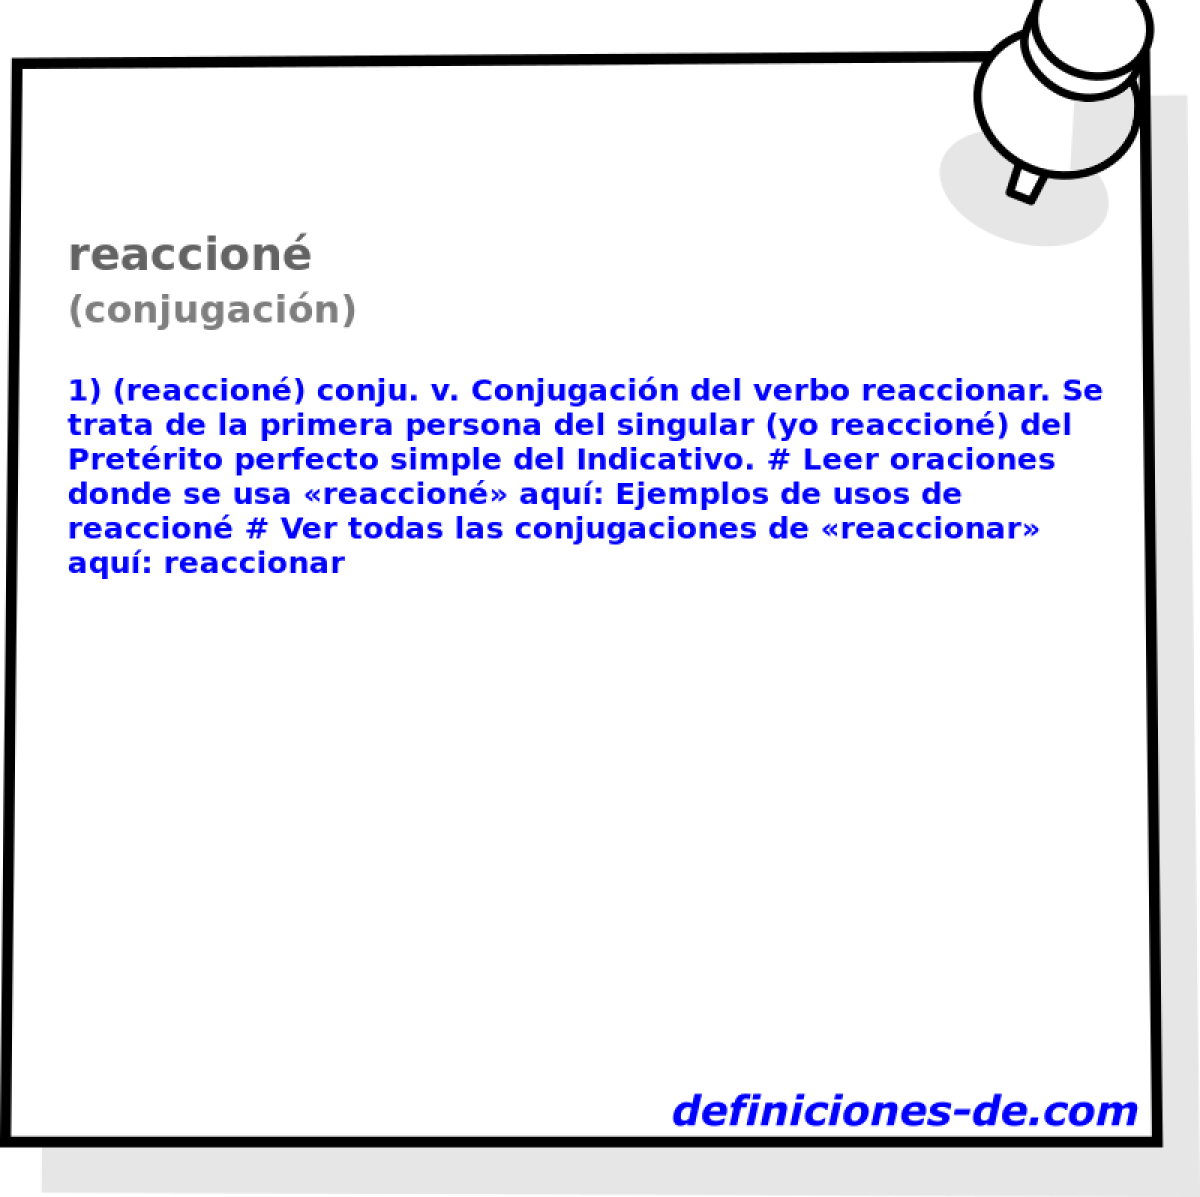 reaccion (conjugacin)